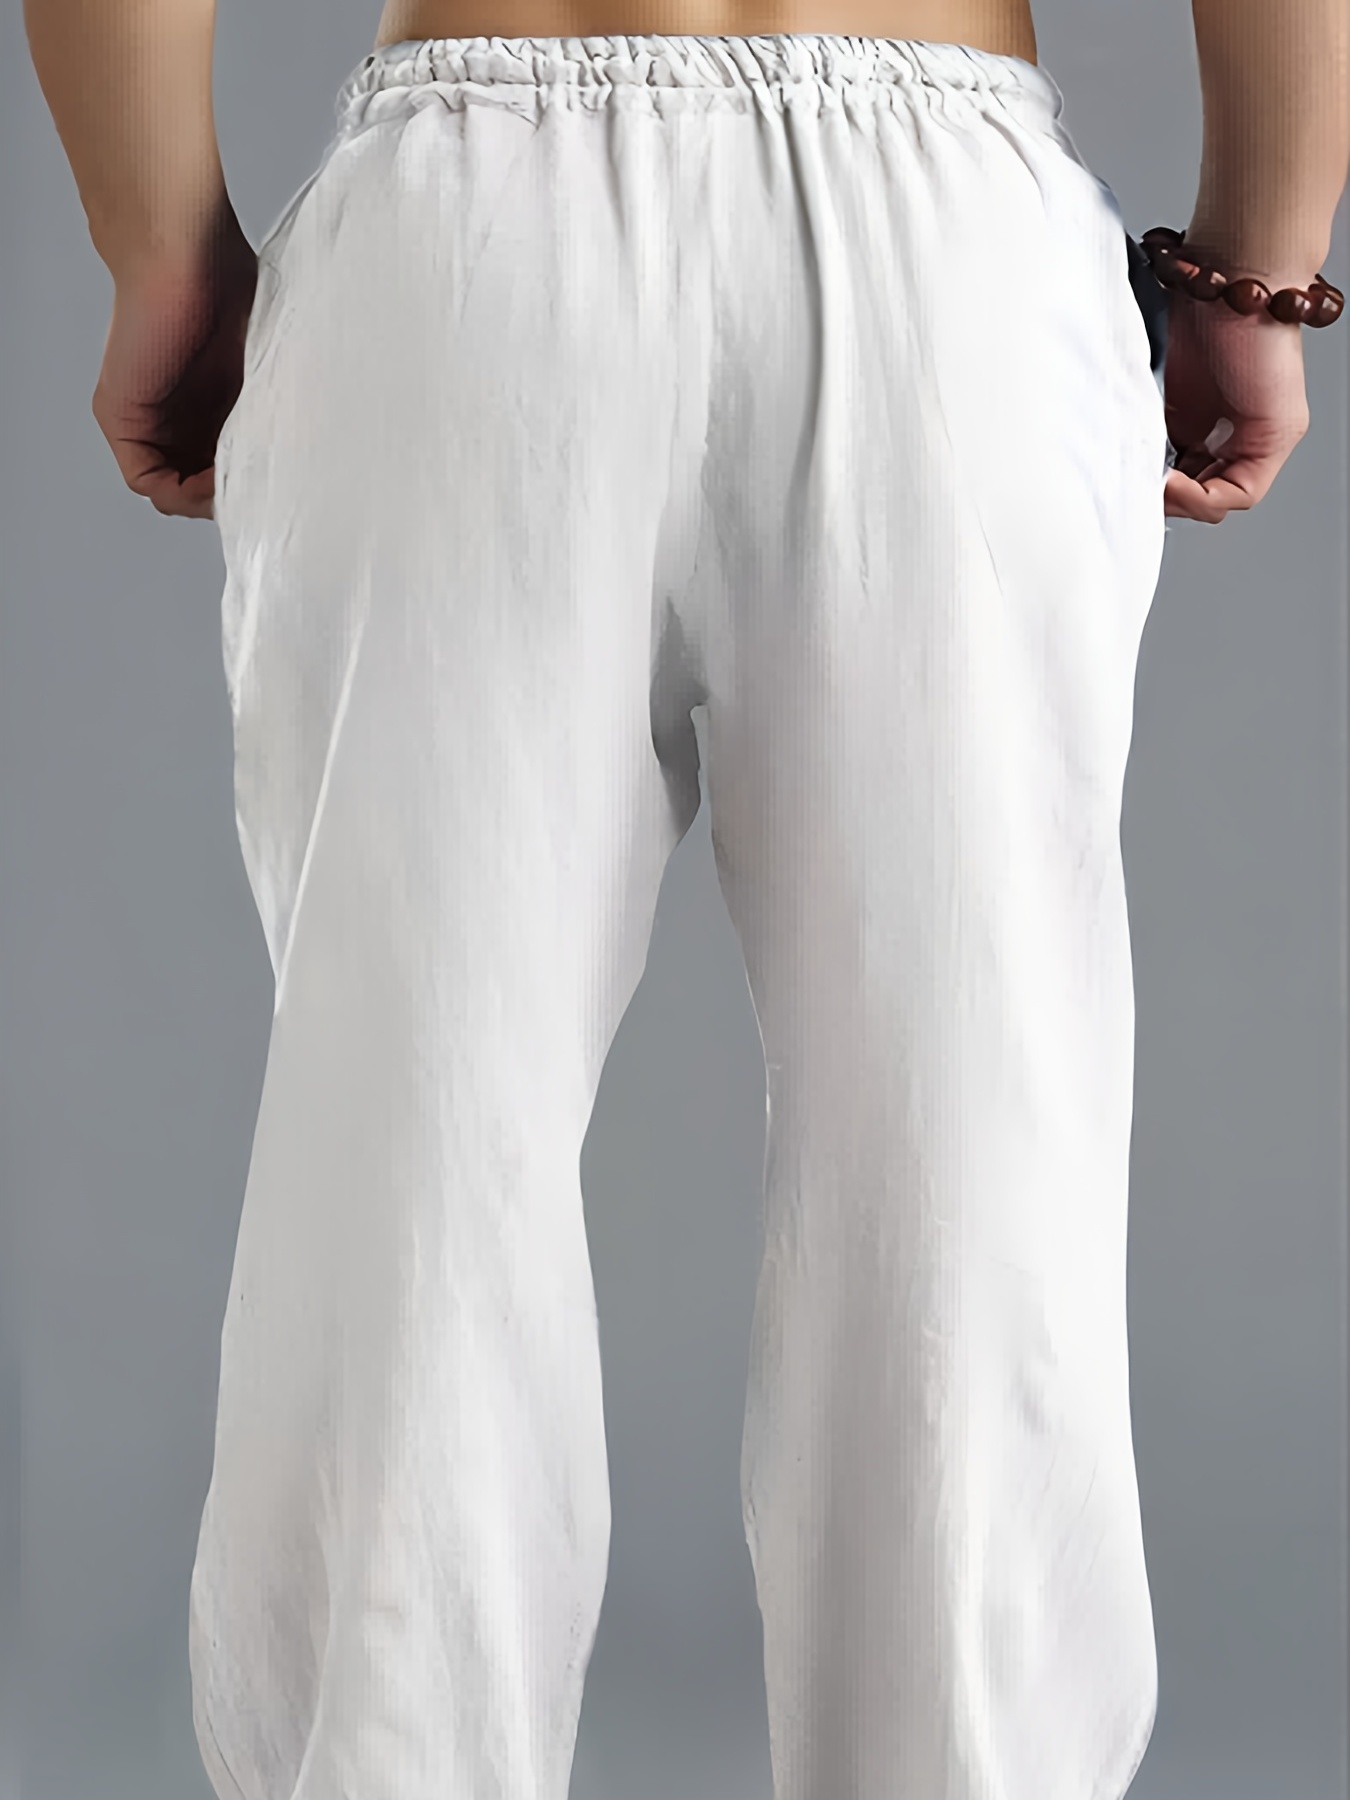 Lisingtool Halara Pants Summer Cropped Trousers Men's Thin Casual Pants  Loose Large Size Harem Pants Beach Shorts. Men's Pants White